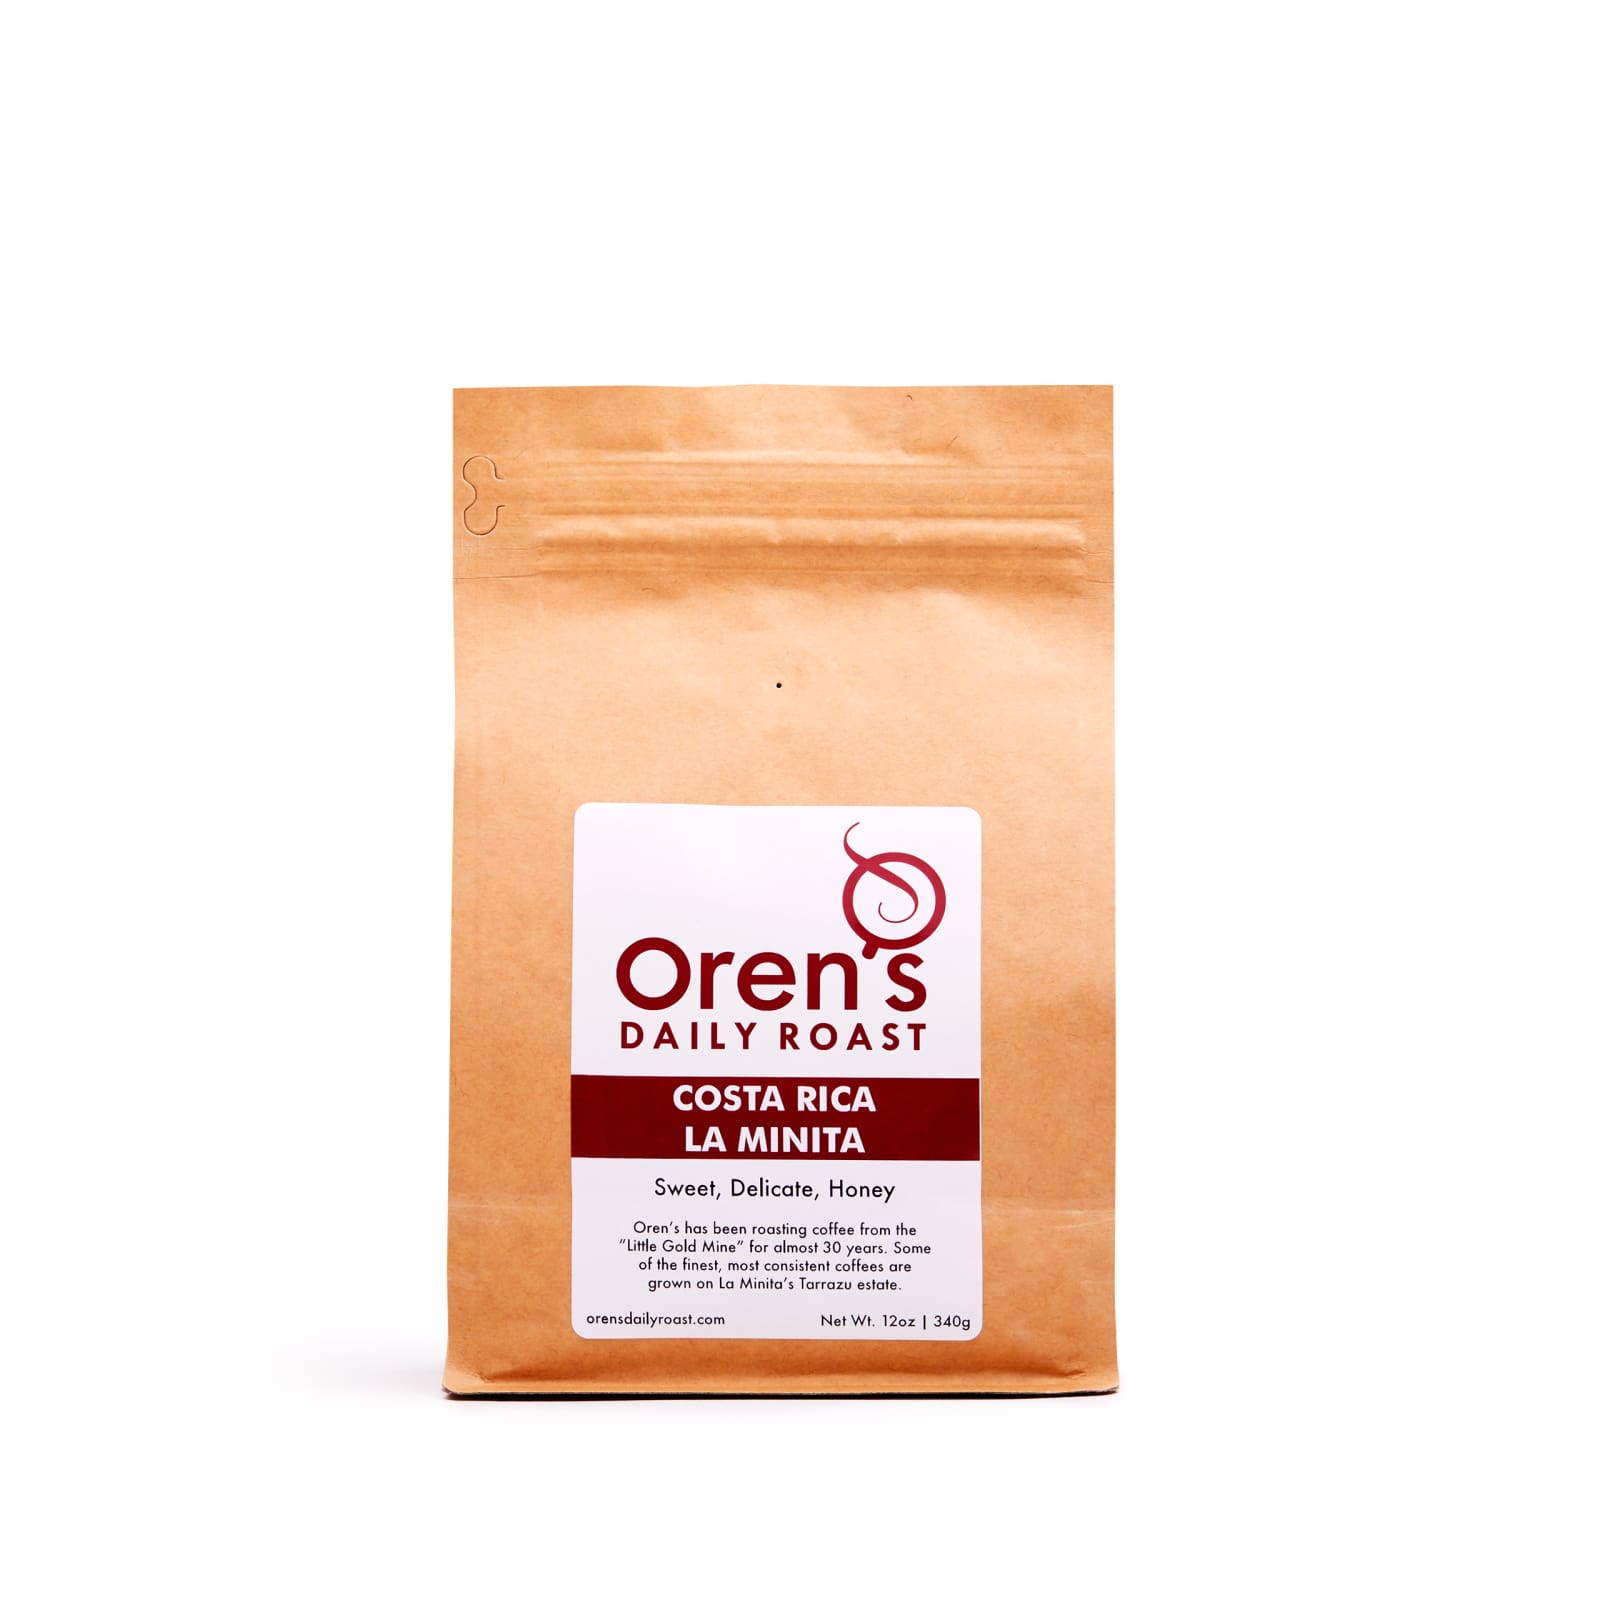 Oren's Costa Rica coffee bag